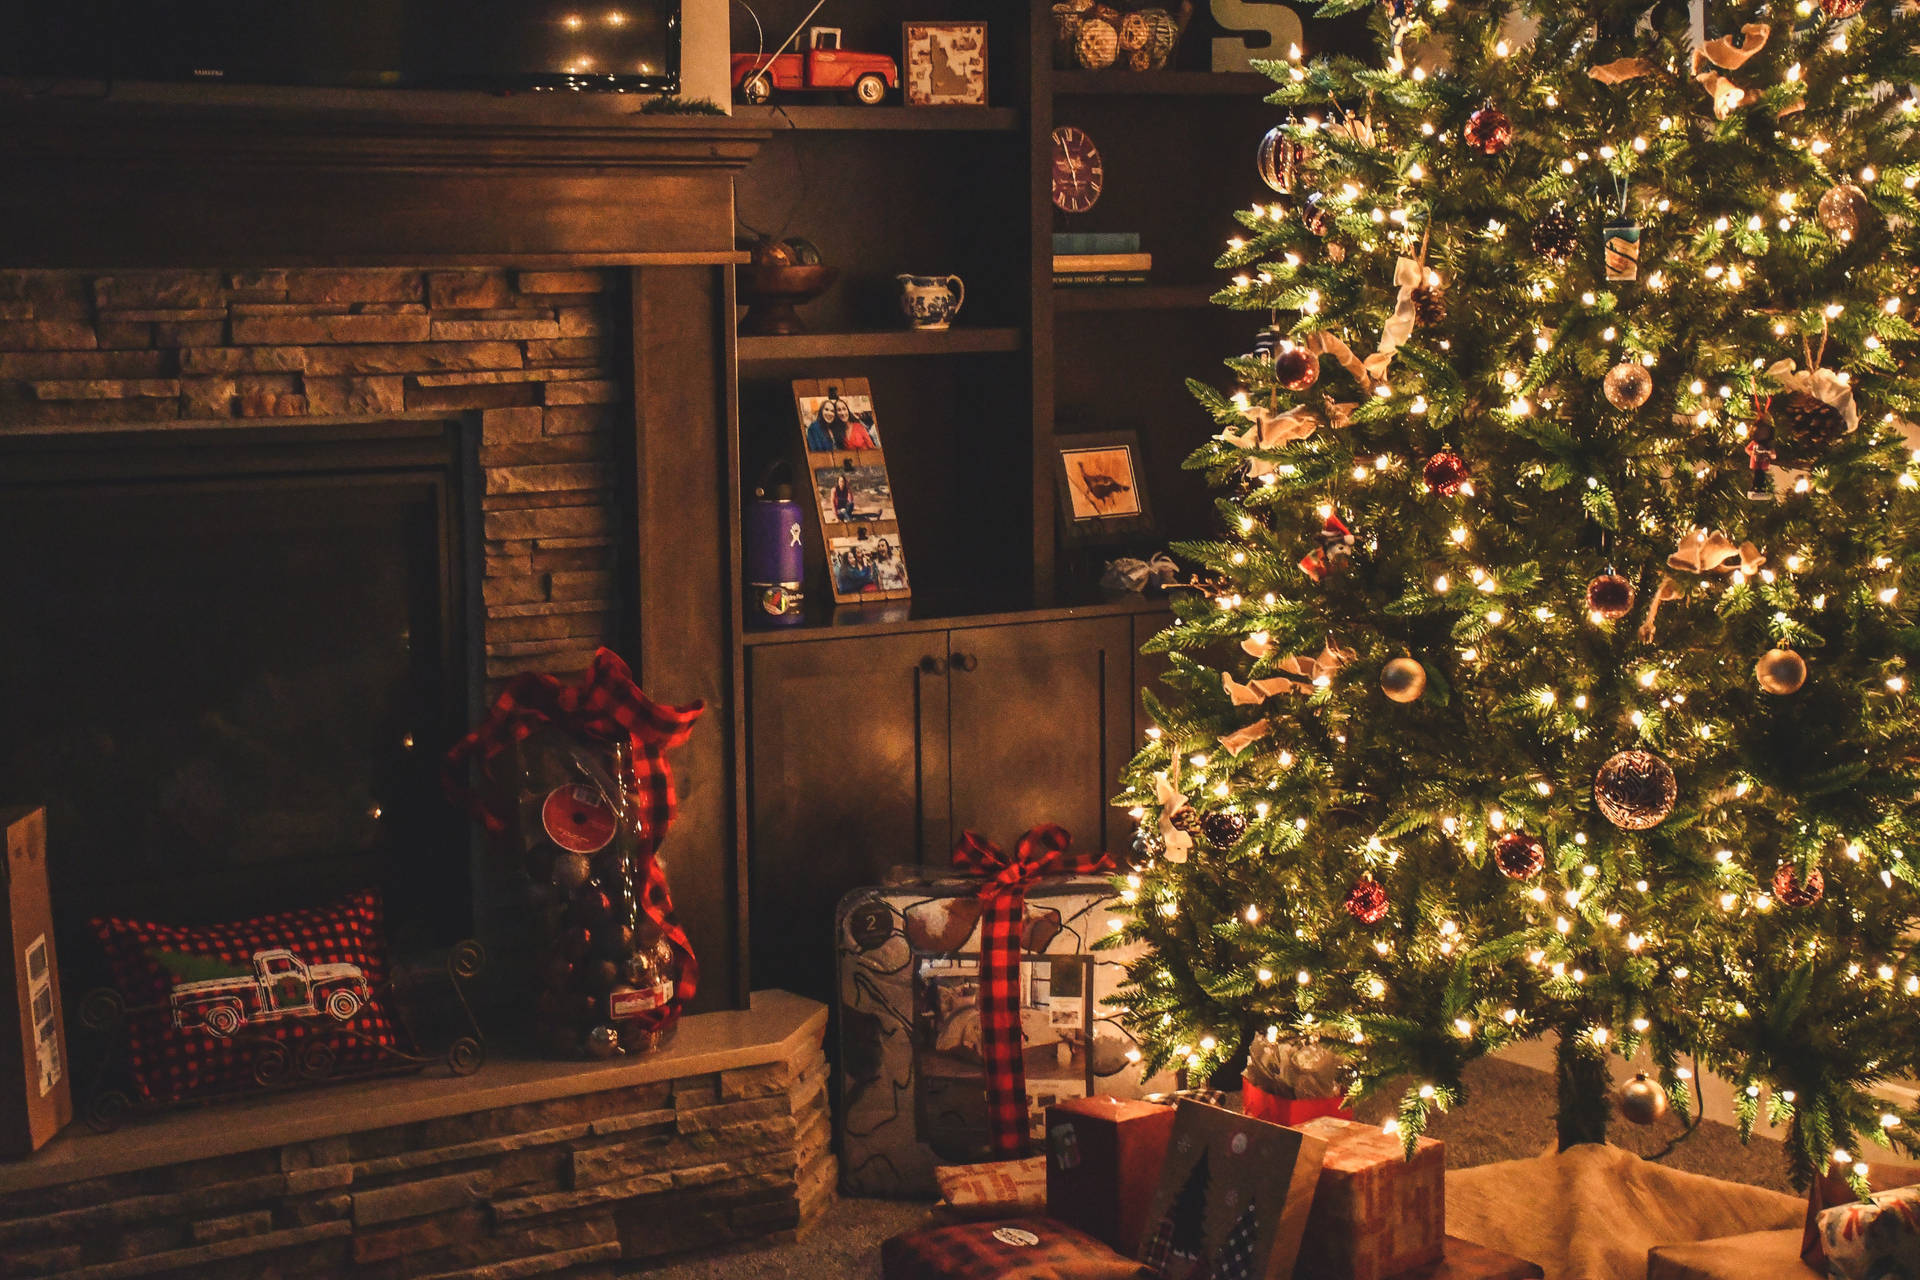 High-resolution Image Of A Traditional Christmas Setup Background